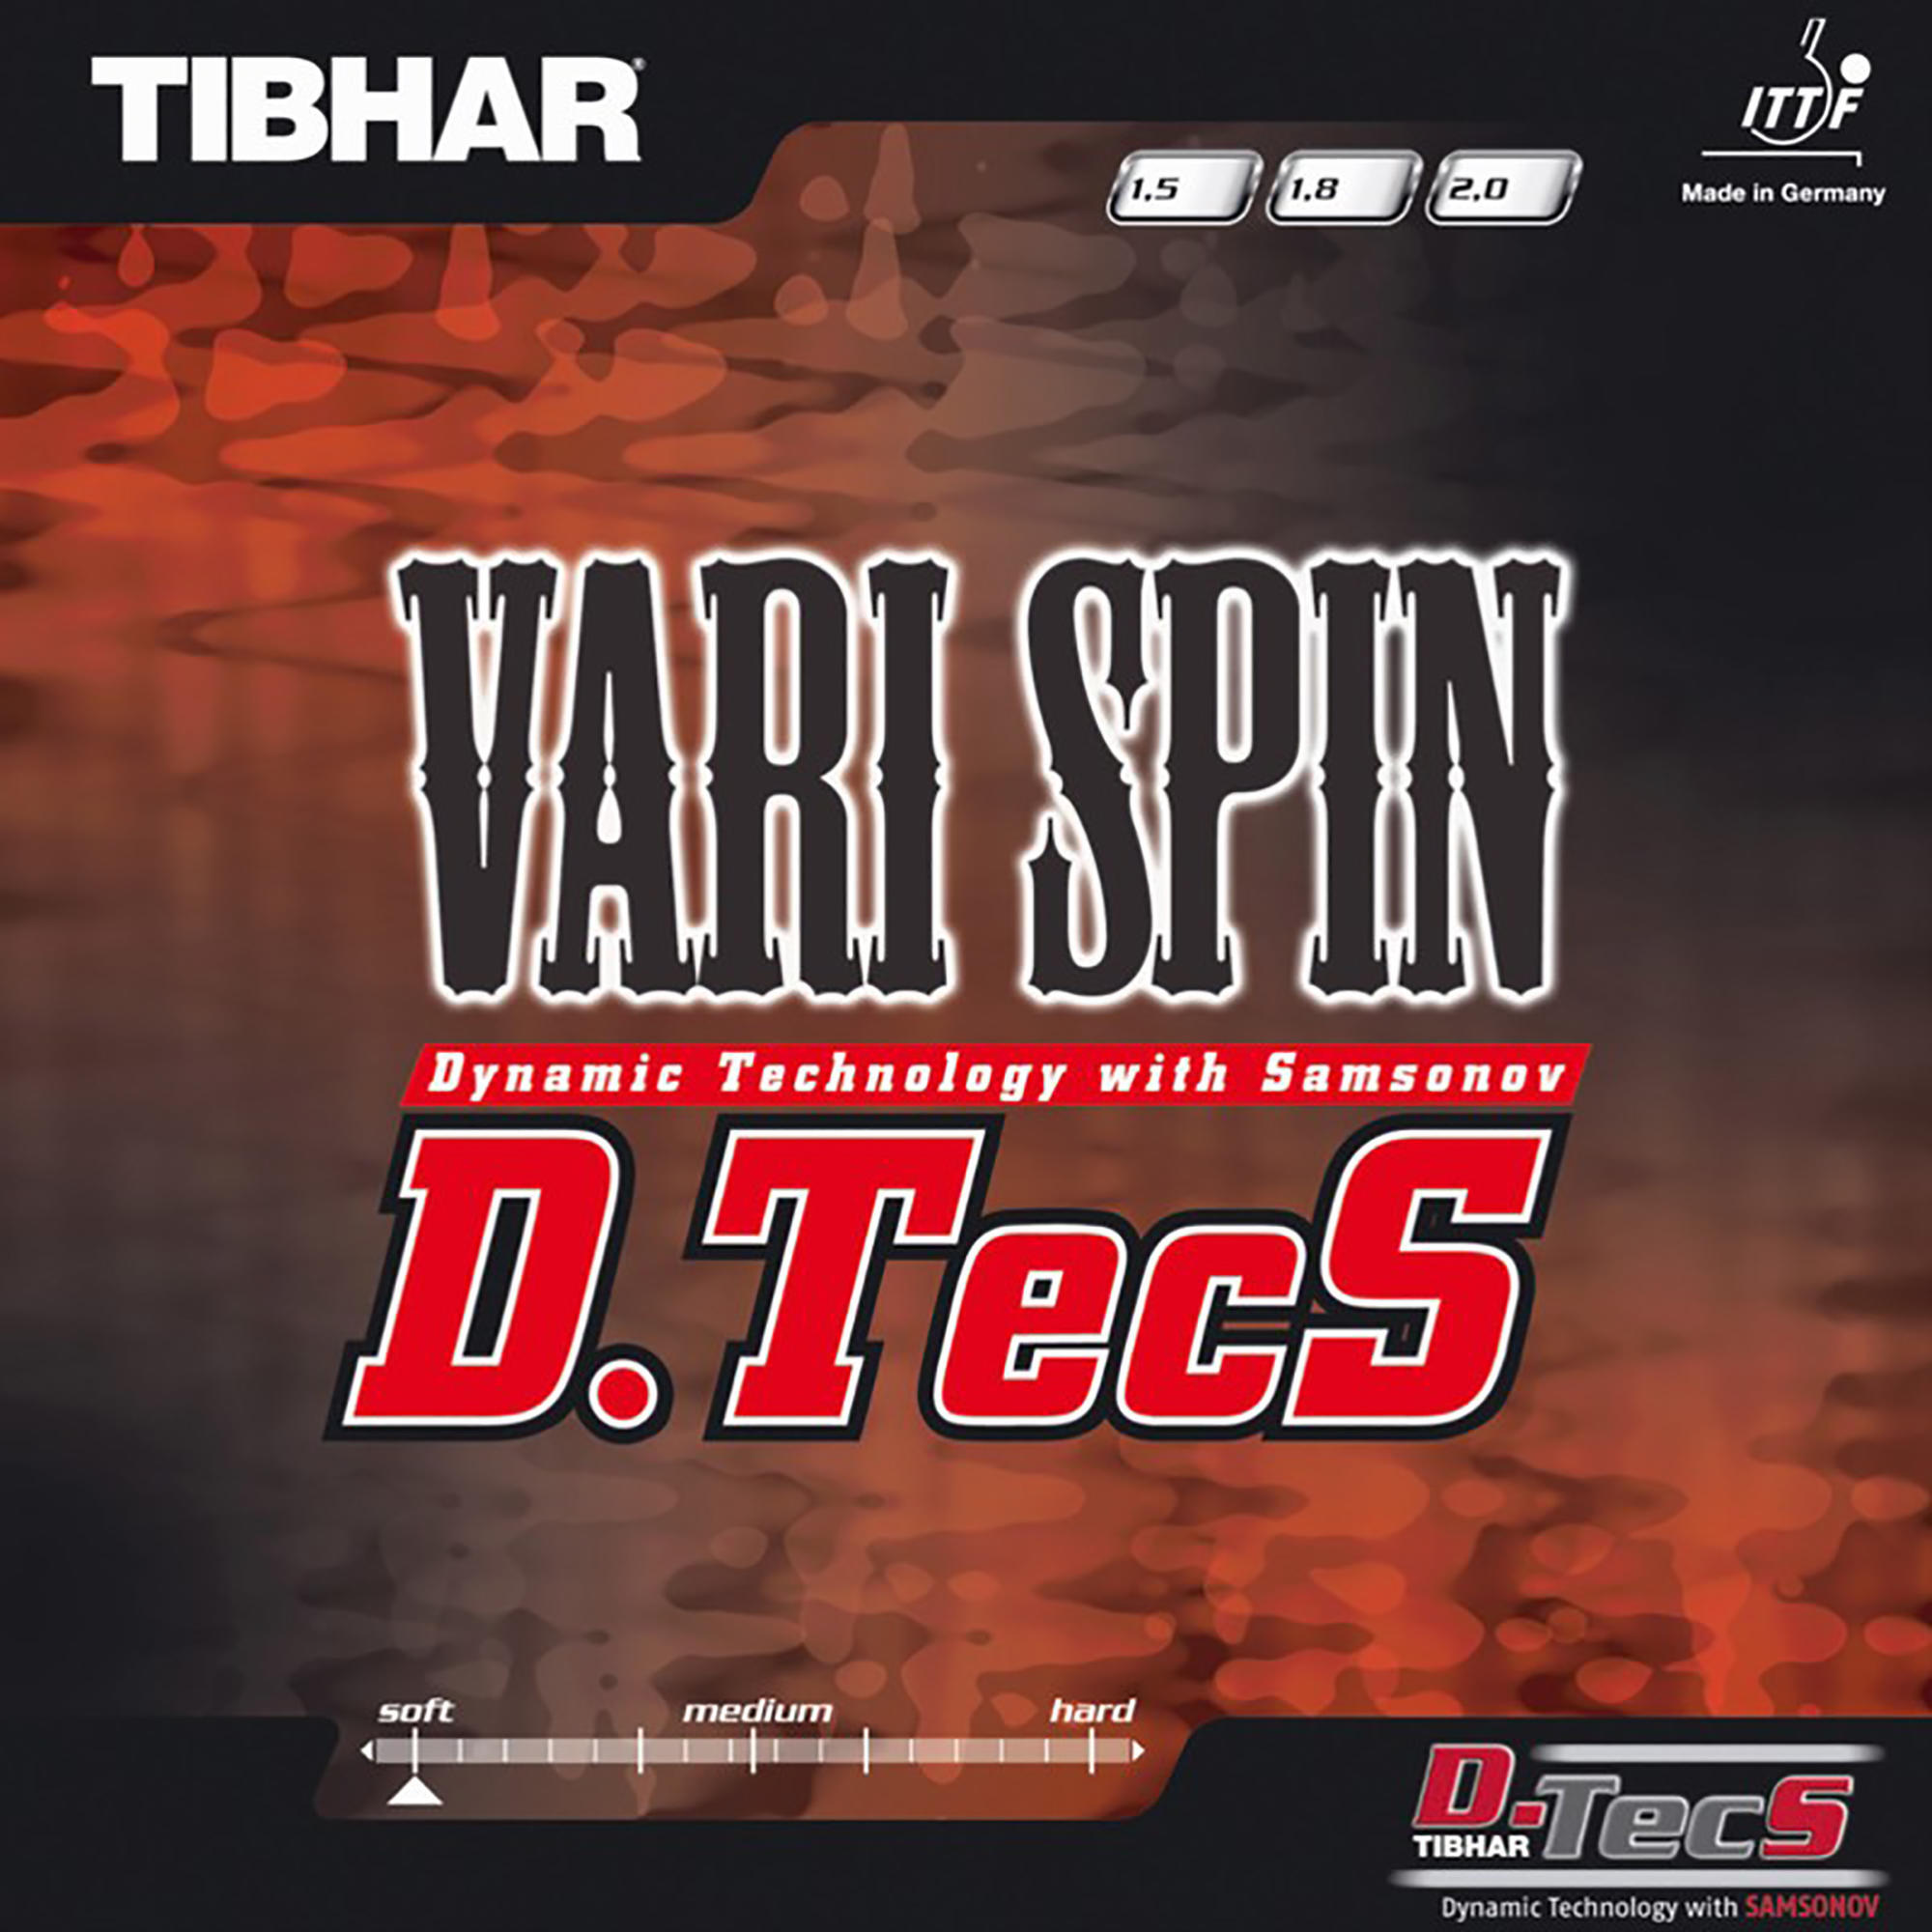 Накладка для настольного тенниса Vari Spin D.TecS TIBHAR цена и фото